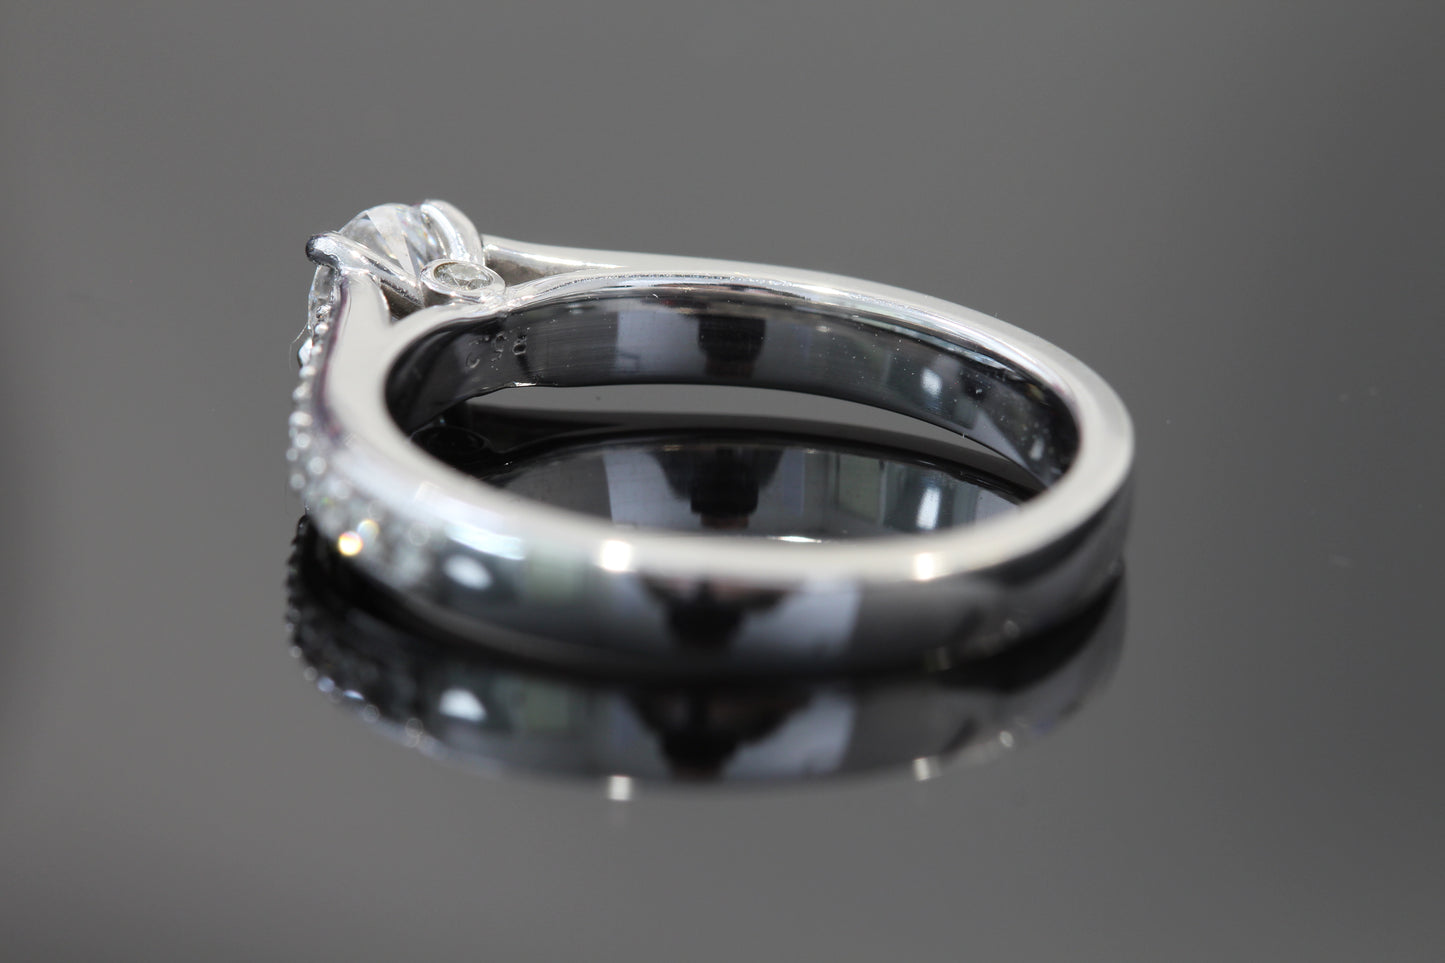 14k diamond engagement ring